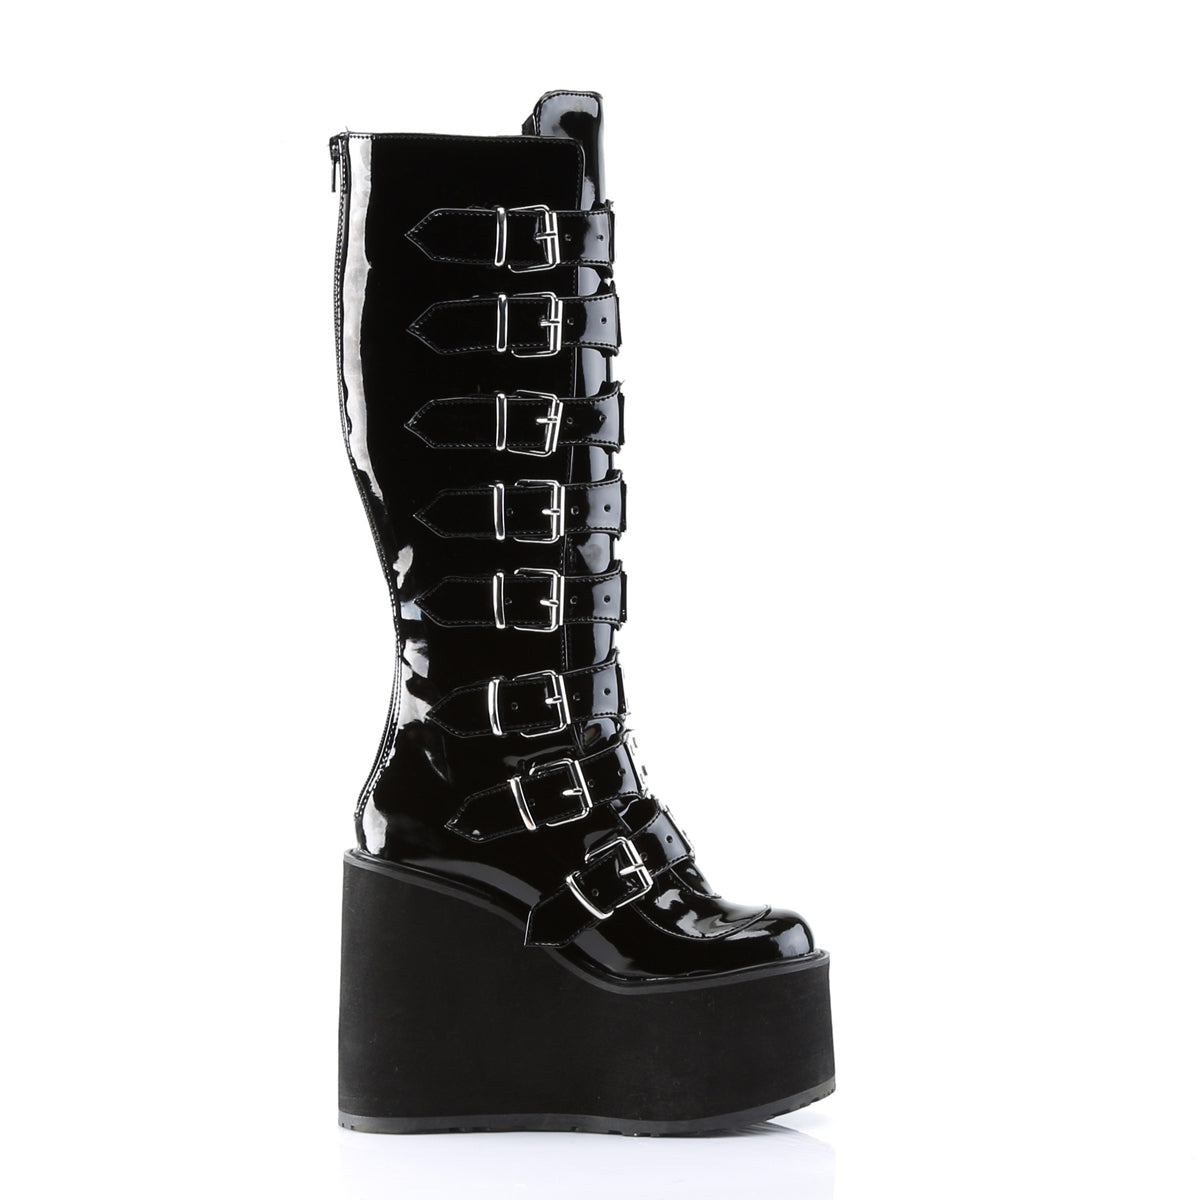 SWING-815 Demonia Black Patent Women's Mid-Calf & Knee High Boots [Demonia Cult Alternative Footwear]